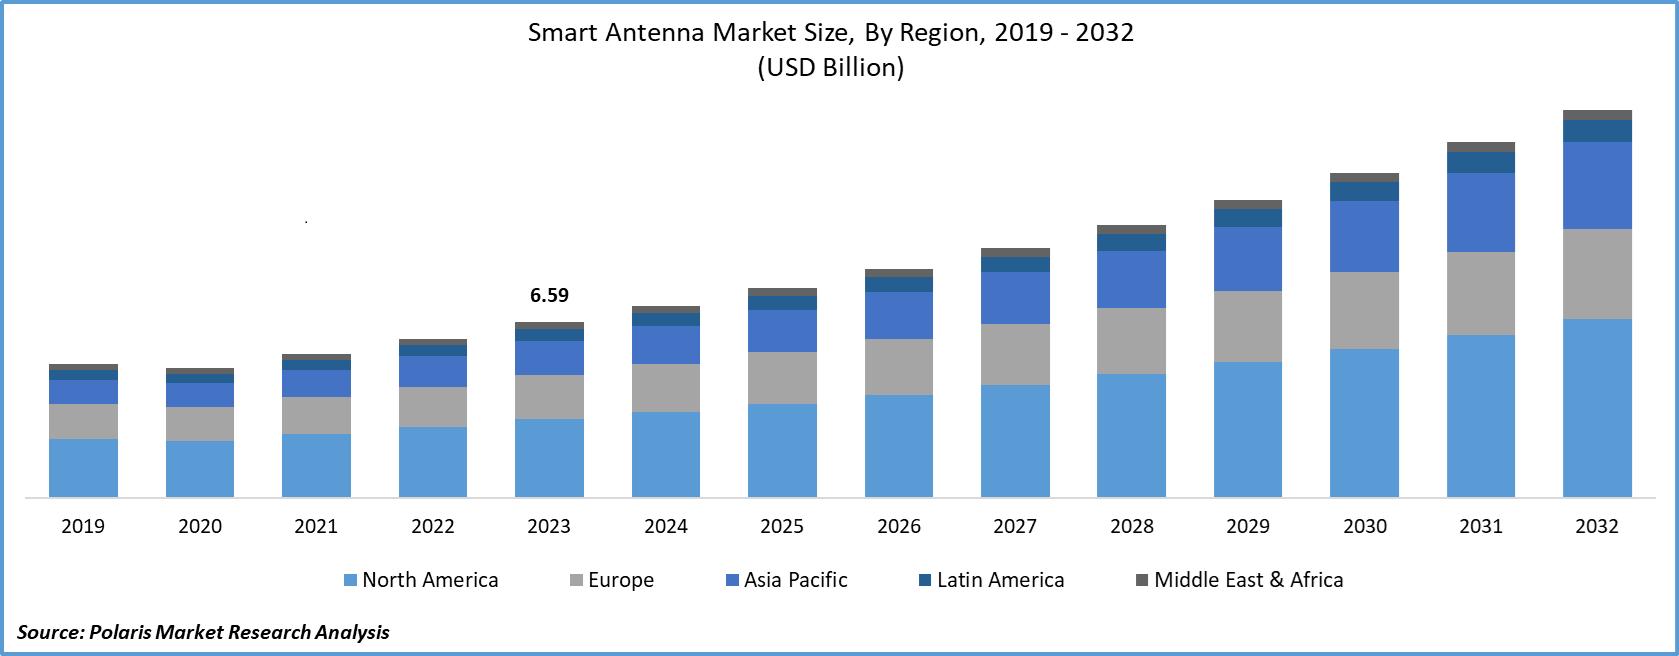 Smart Antenna Market Size